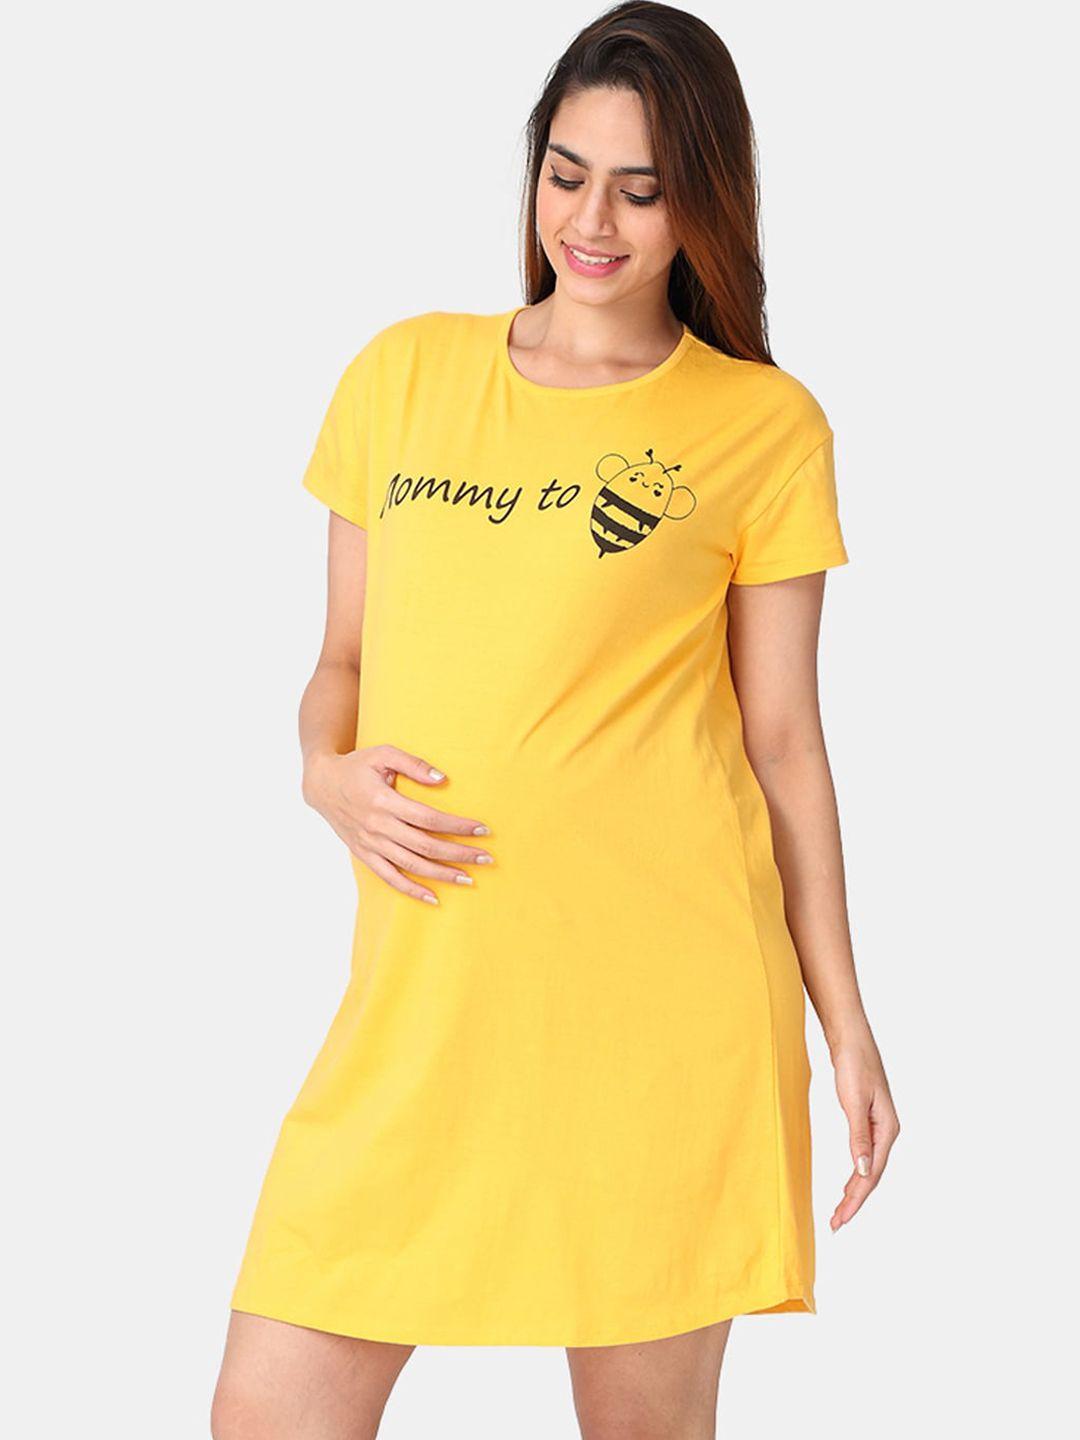 the-mom-store-women-yellow-typography-printed-maternity-t-shirt-dress